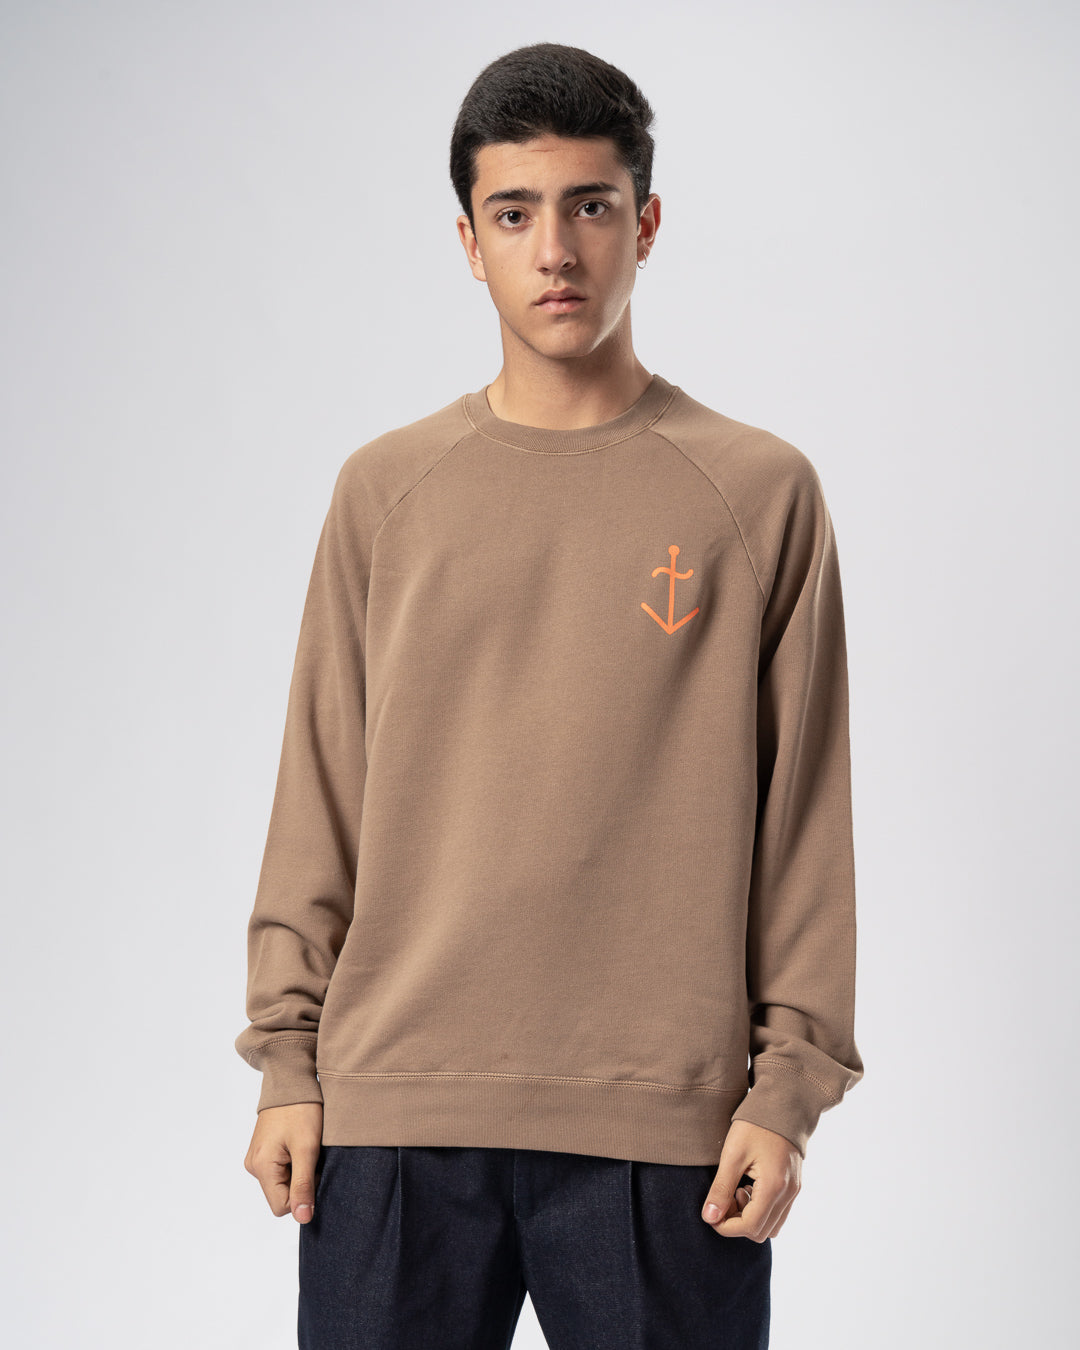 Cunha coco/orange sweatshirt